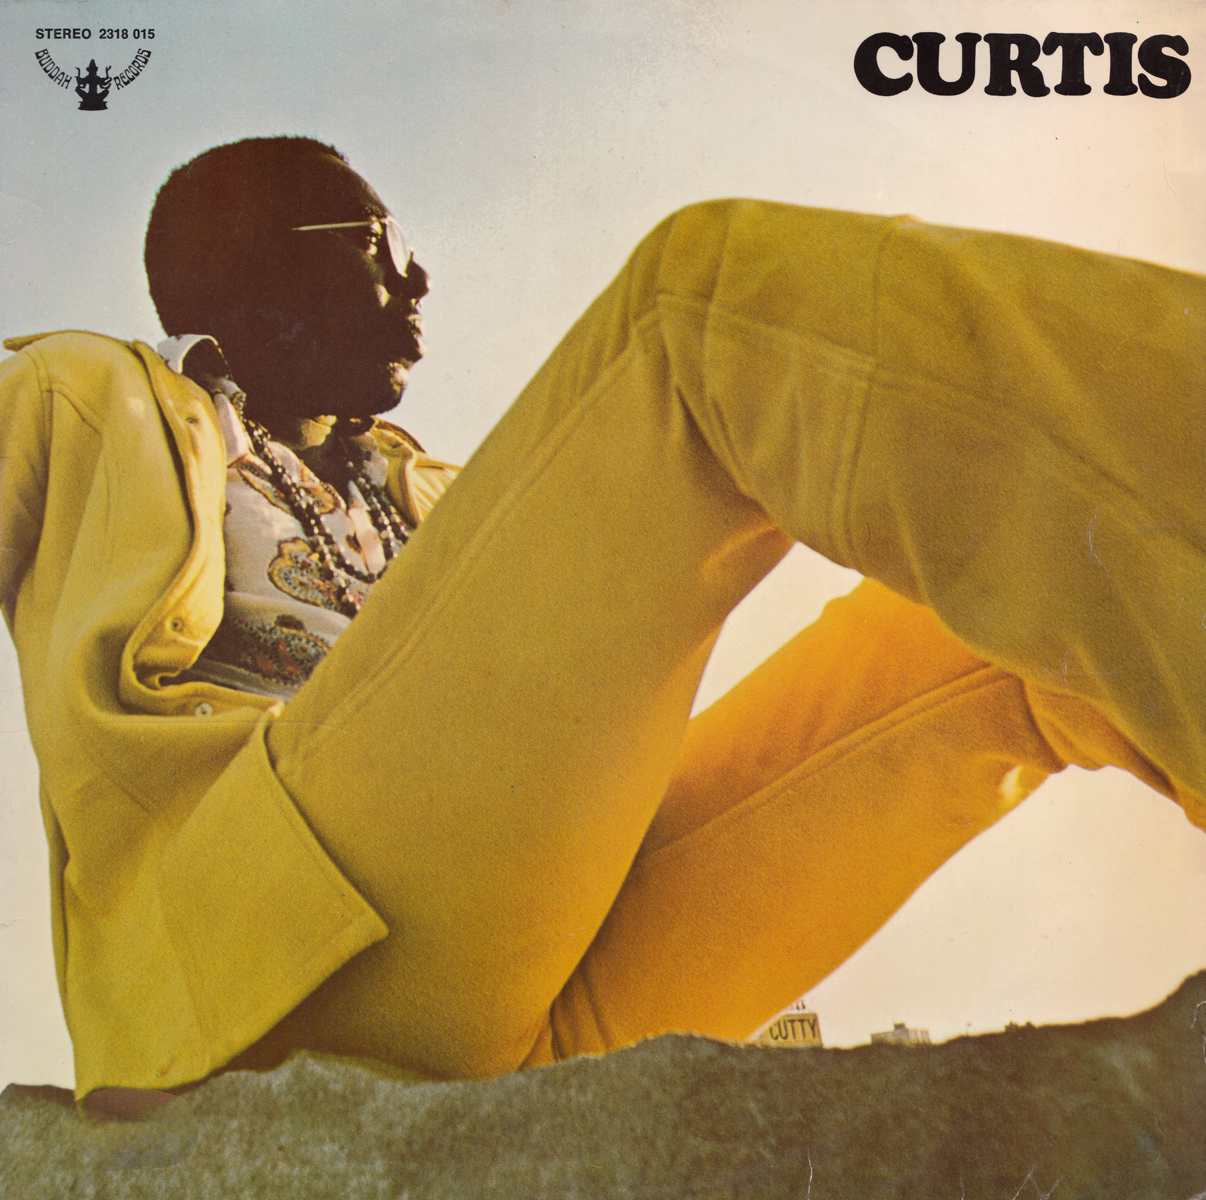 Curis Mayfield "Curtis" LP